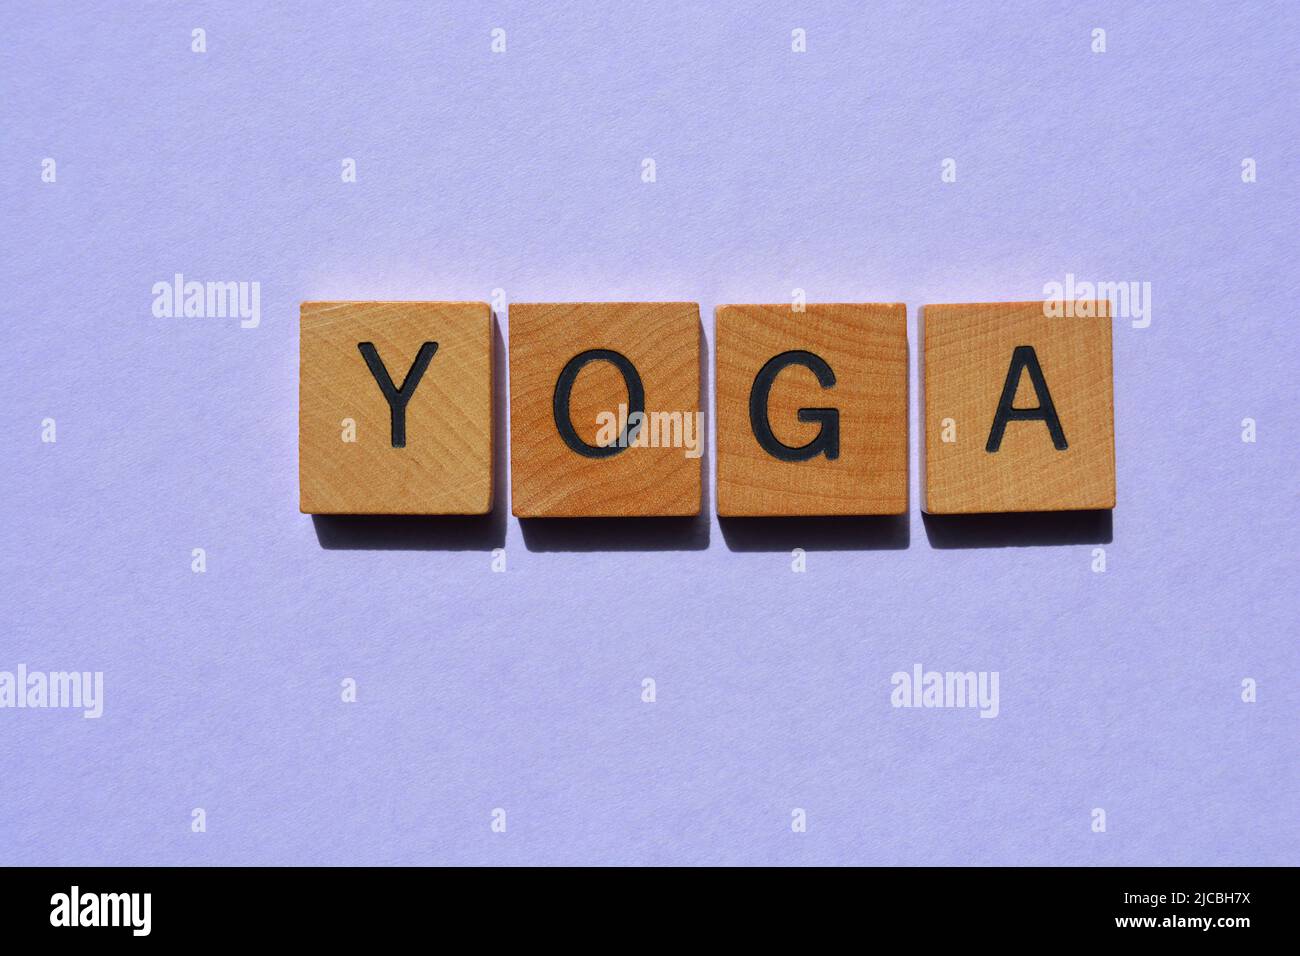 Yoga, palabra en letras del alfabeto de madera aisladas sobre fondo púrpura Foto de stock